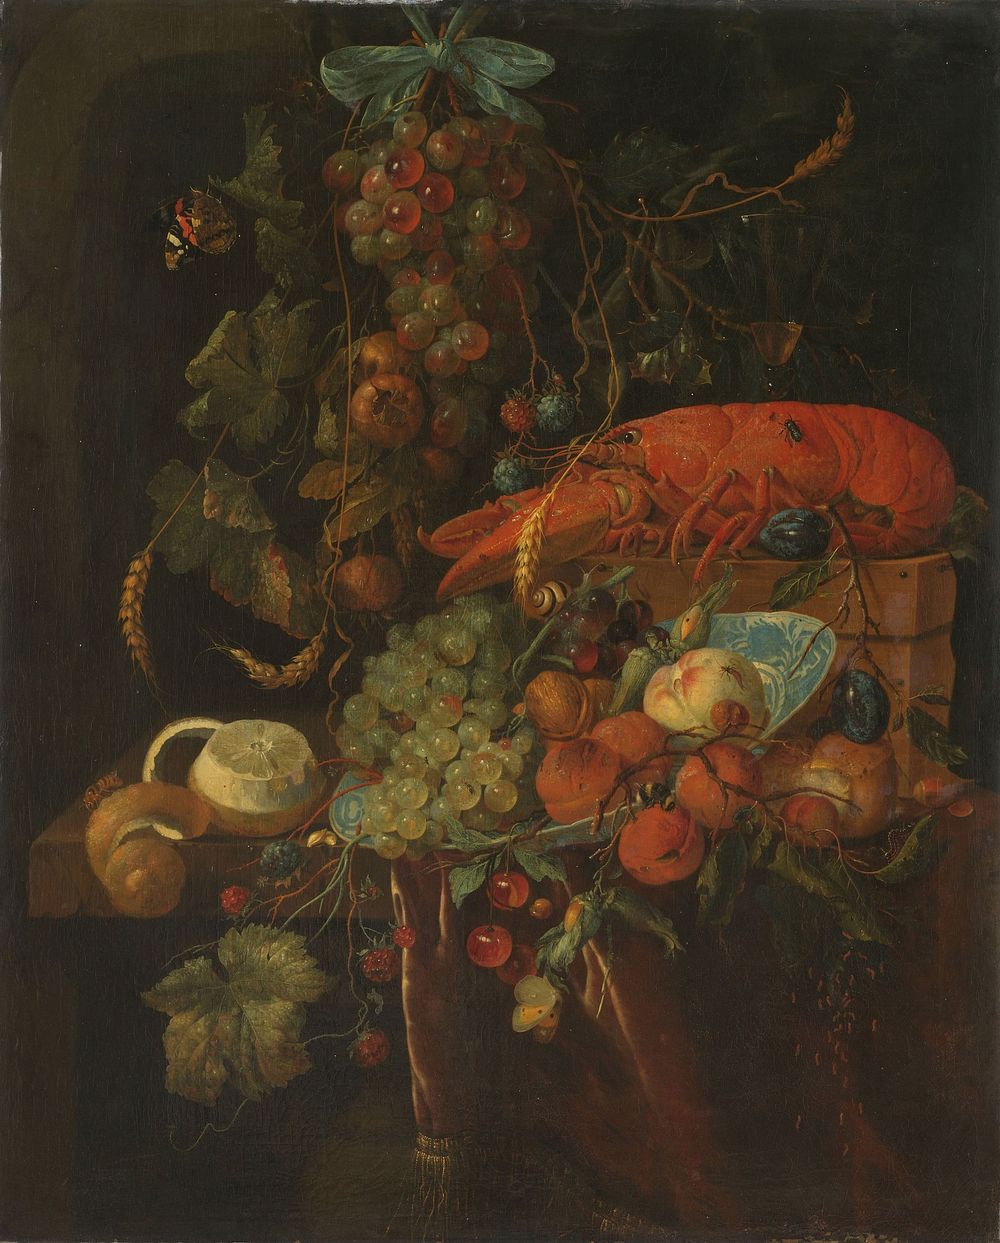 Still Life with Fruit and a Lobster (1640 - 1700) by Jan Davidsz de Heem